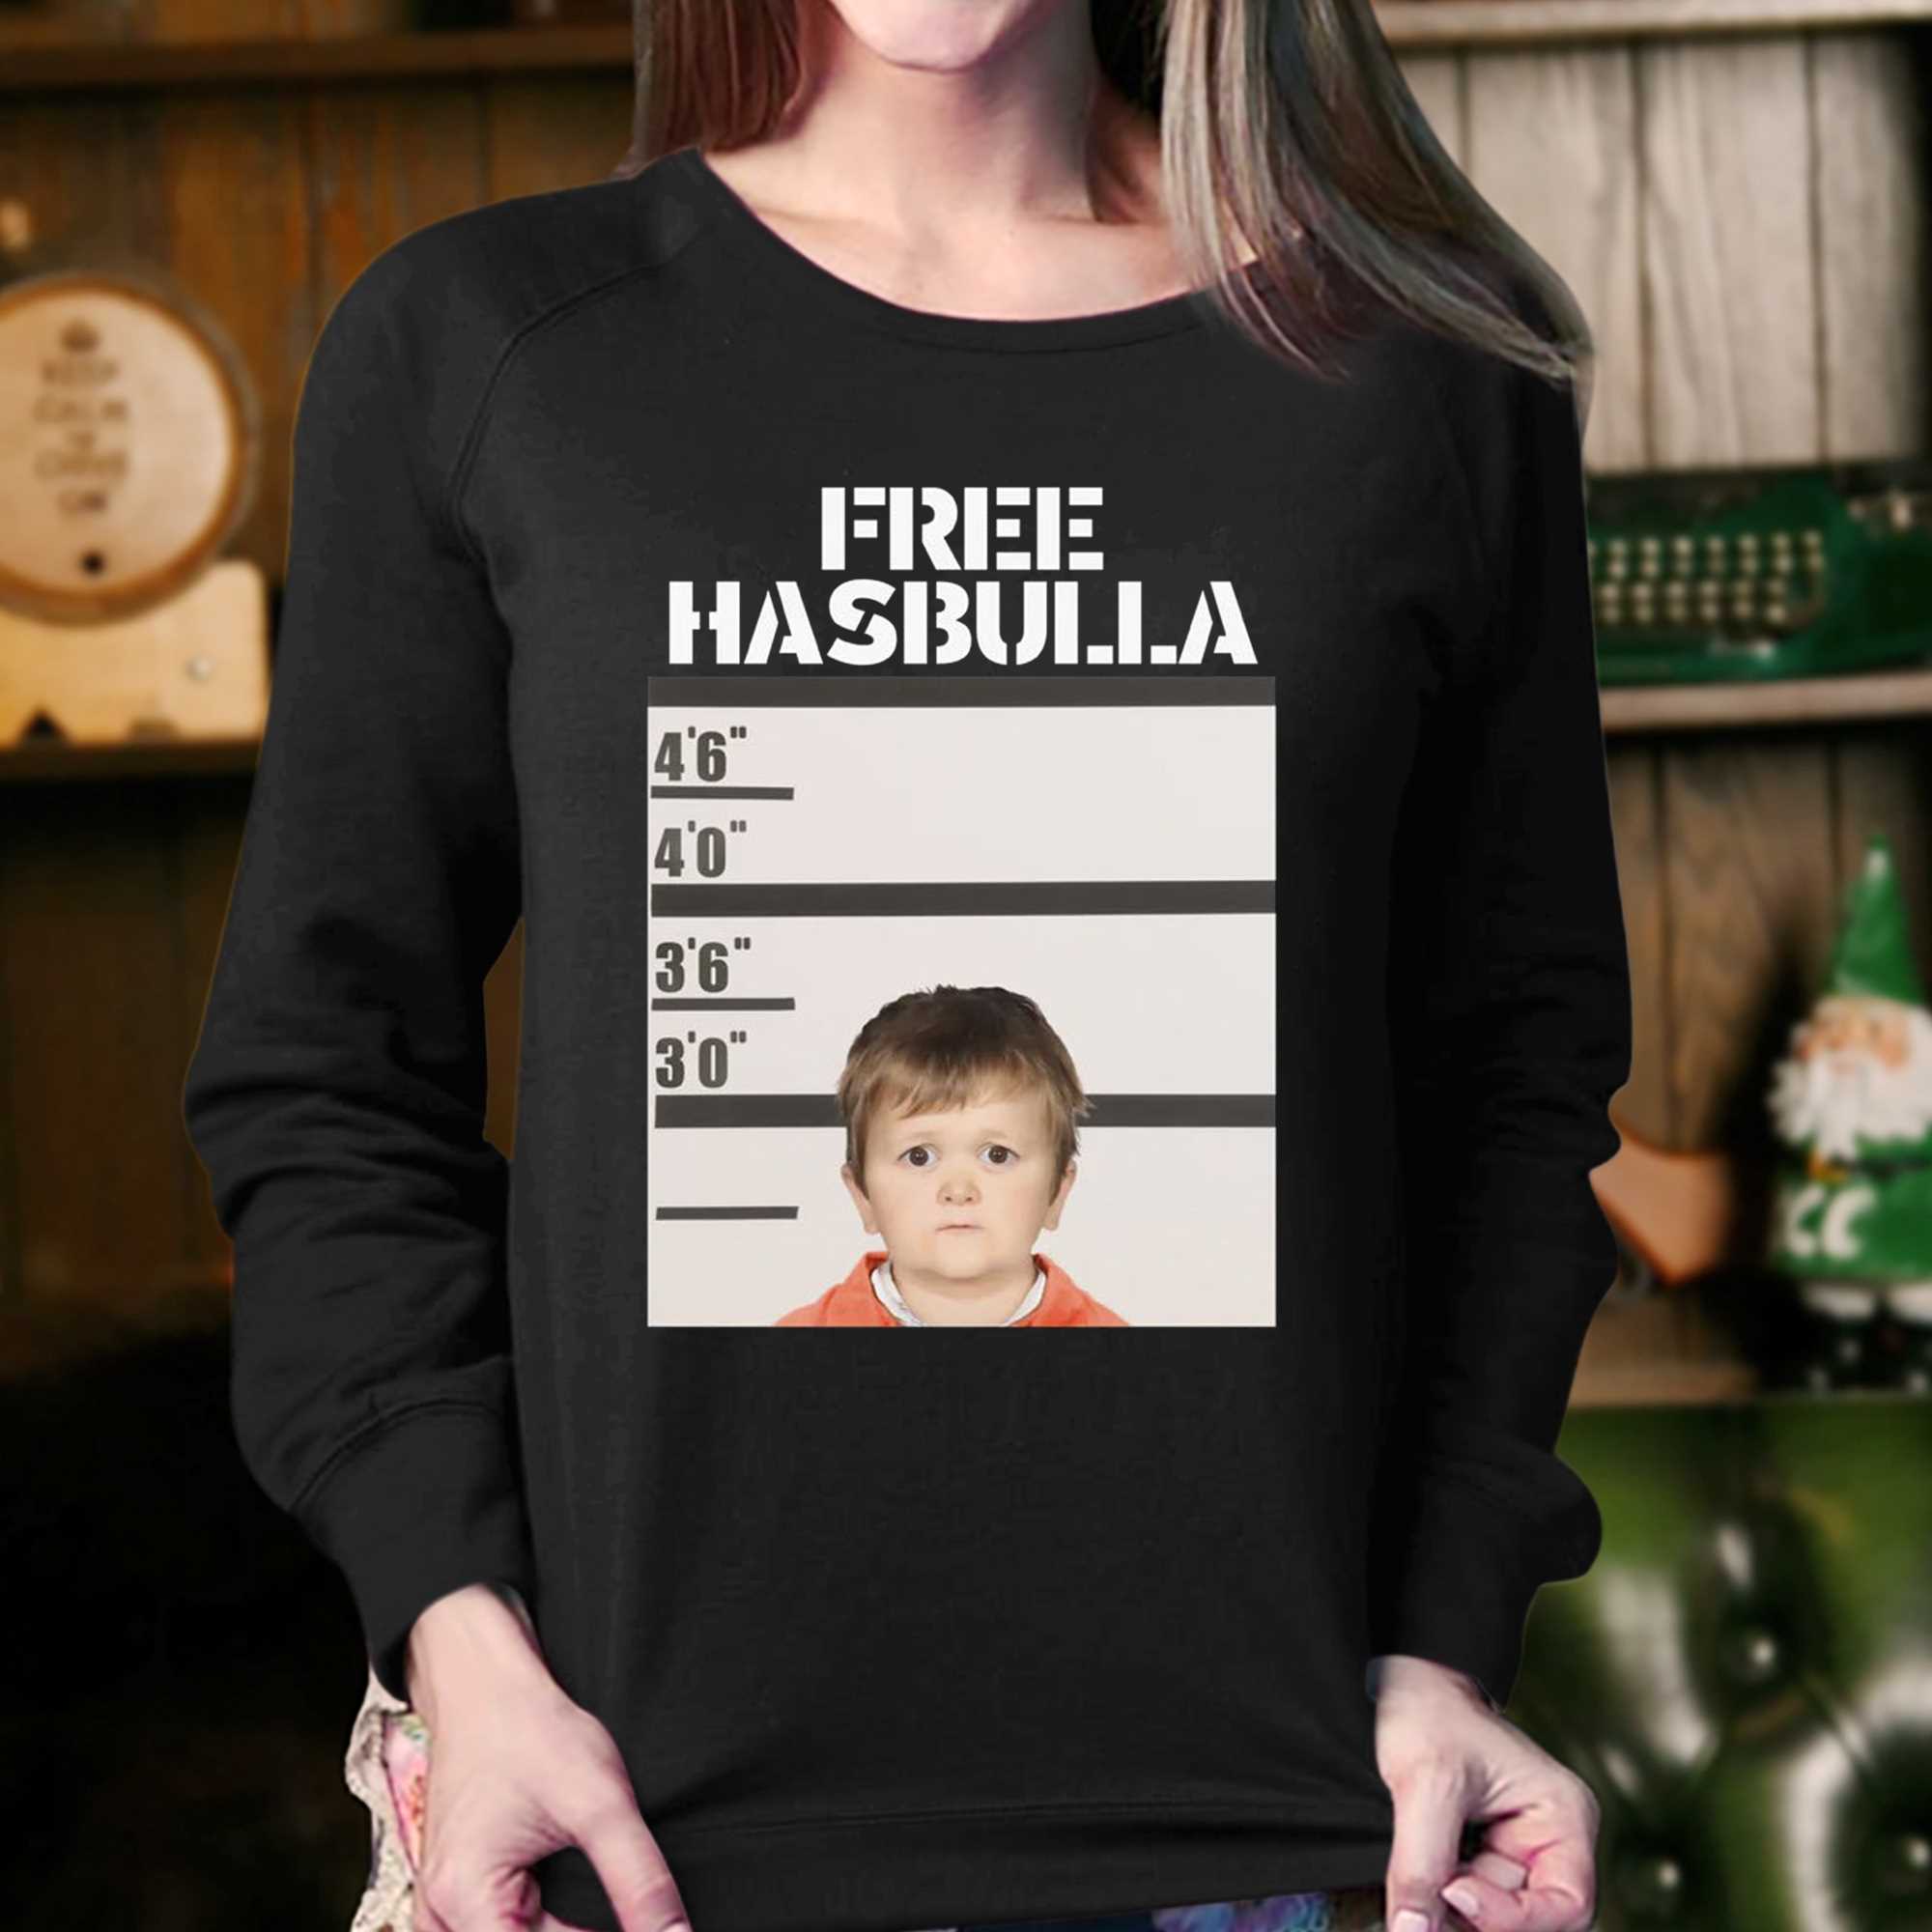 Free Hasbulla T-shirt - Shibtee Clothing